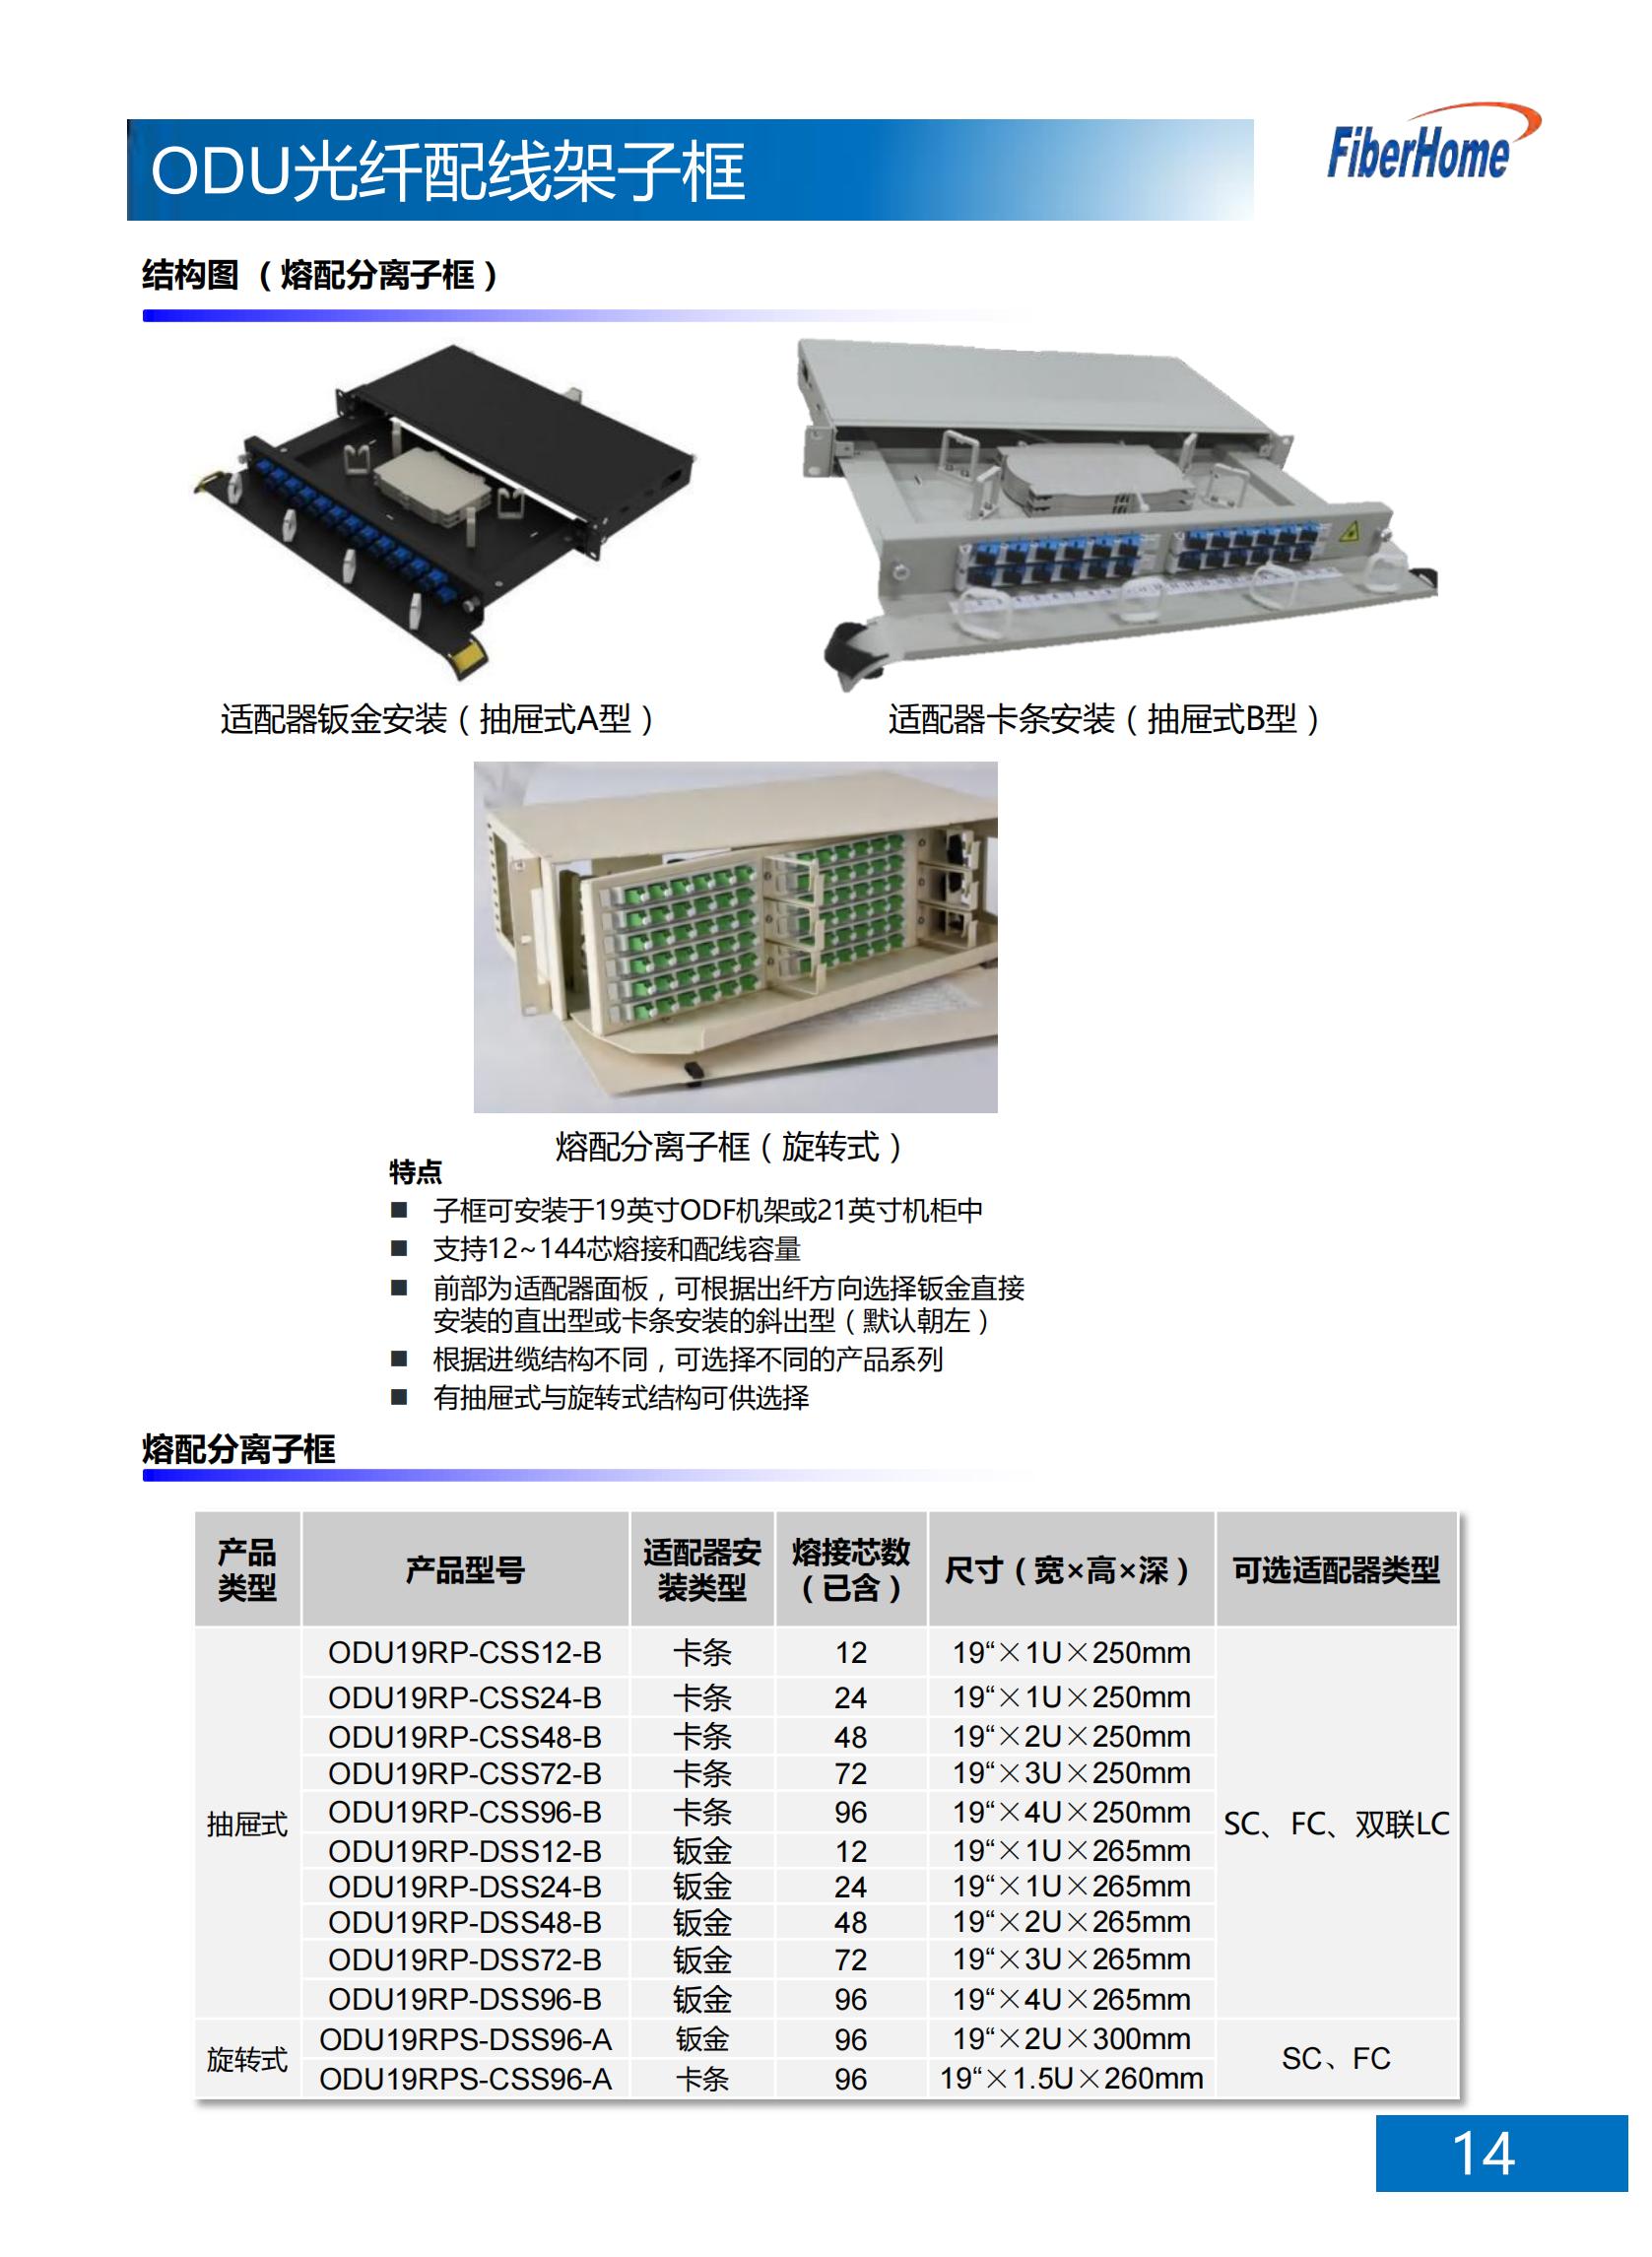 48-core ODU optical fiber distribution frame ODU19T-A48-A-LC (including 24-core LC fusion integration unit*2)